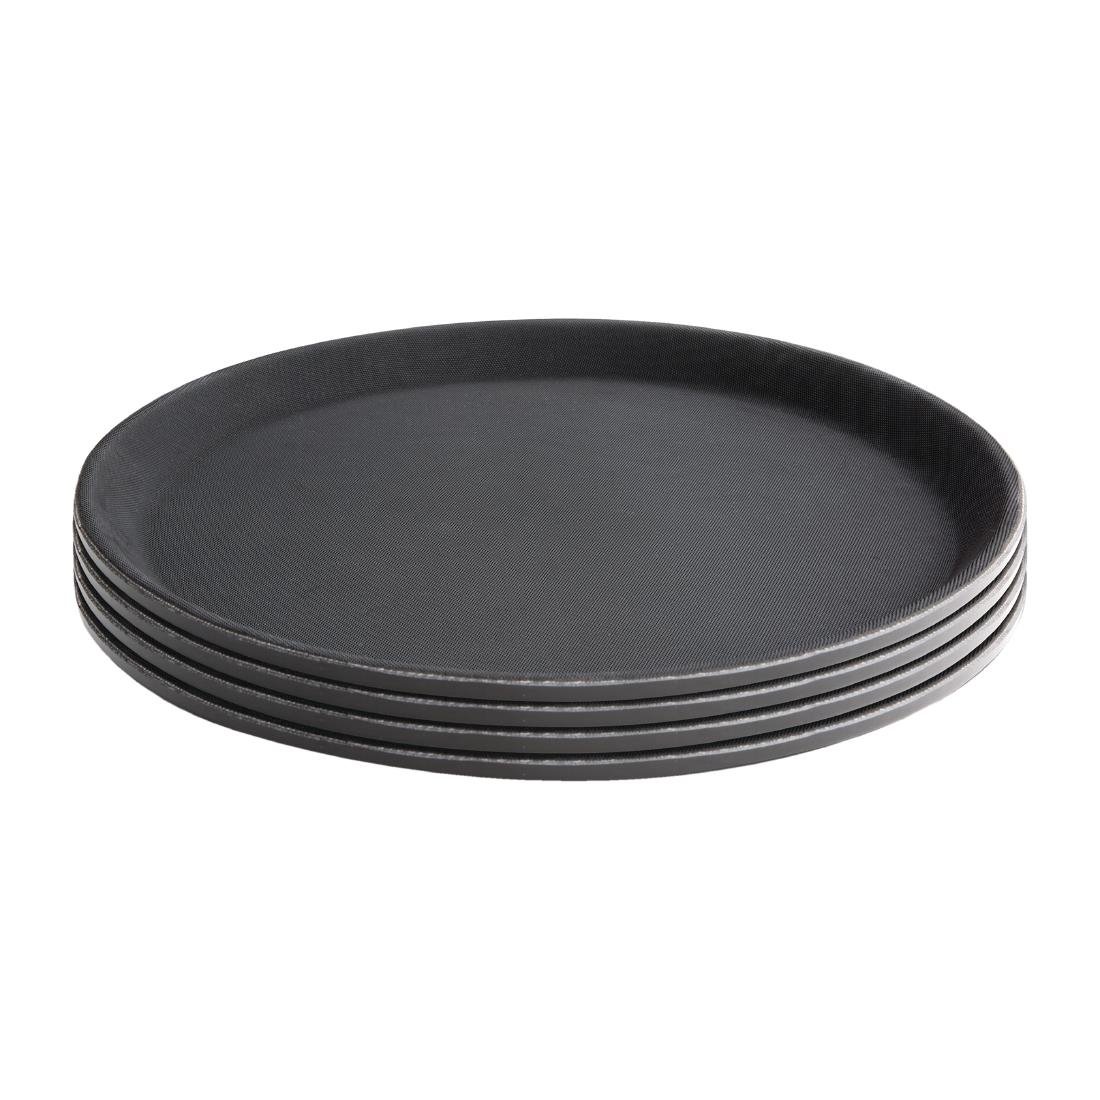 Kristallon Fibreglass Round Non-Slip Tray Black 280mm JD Catering Equipment Solutions Ltd